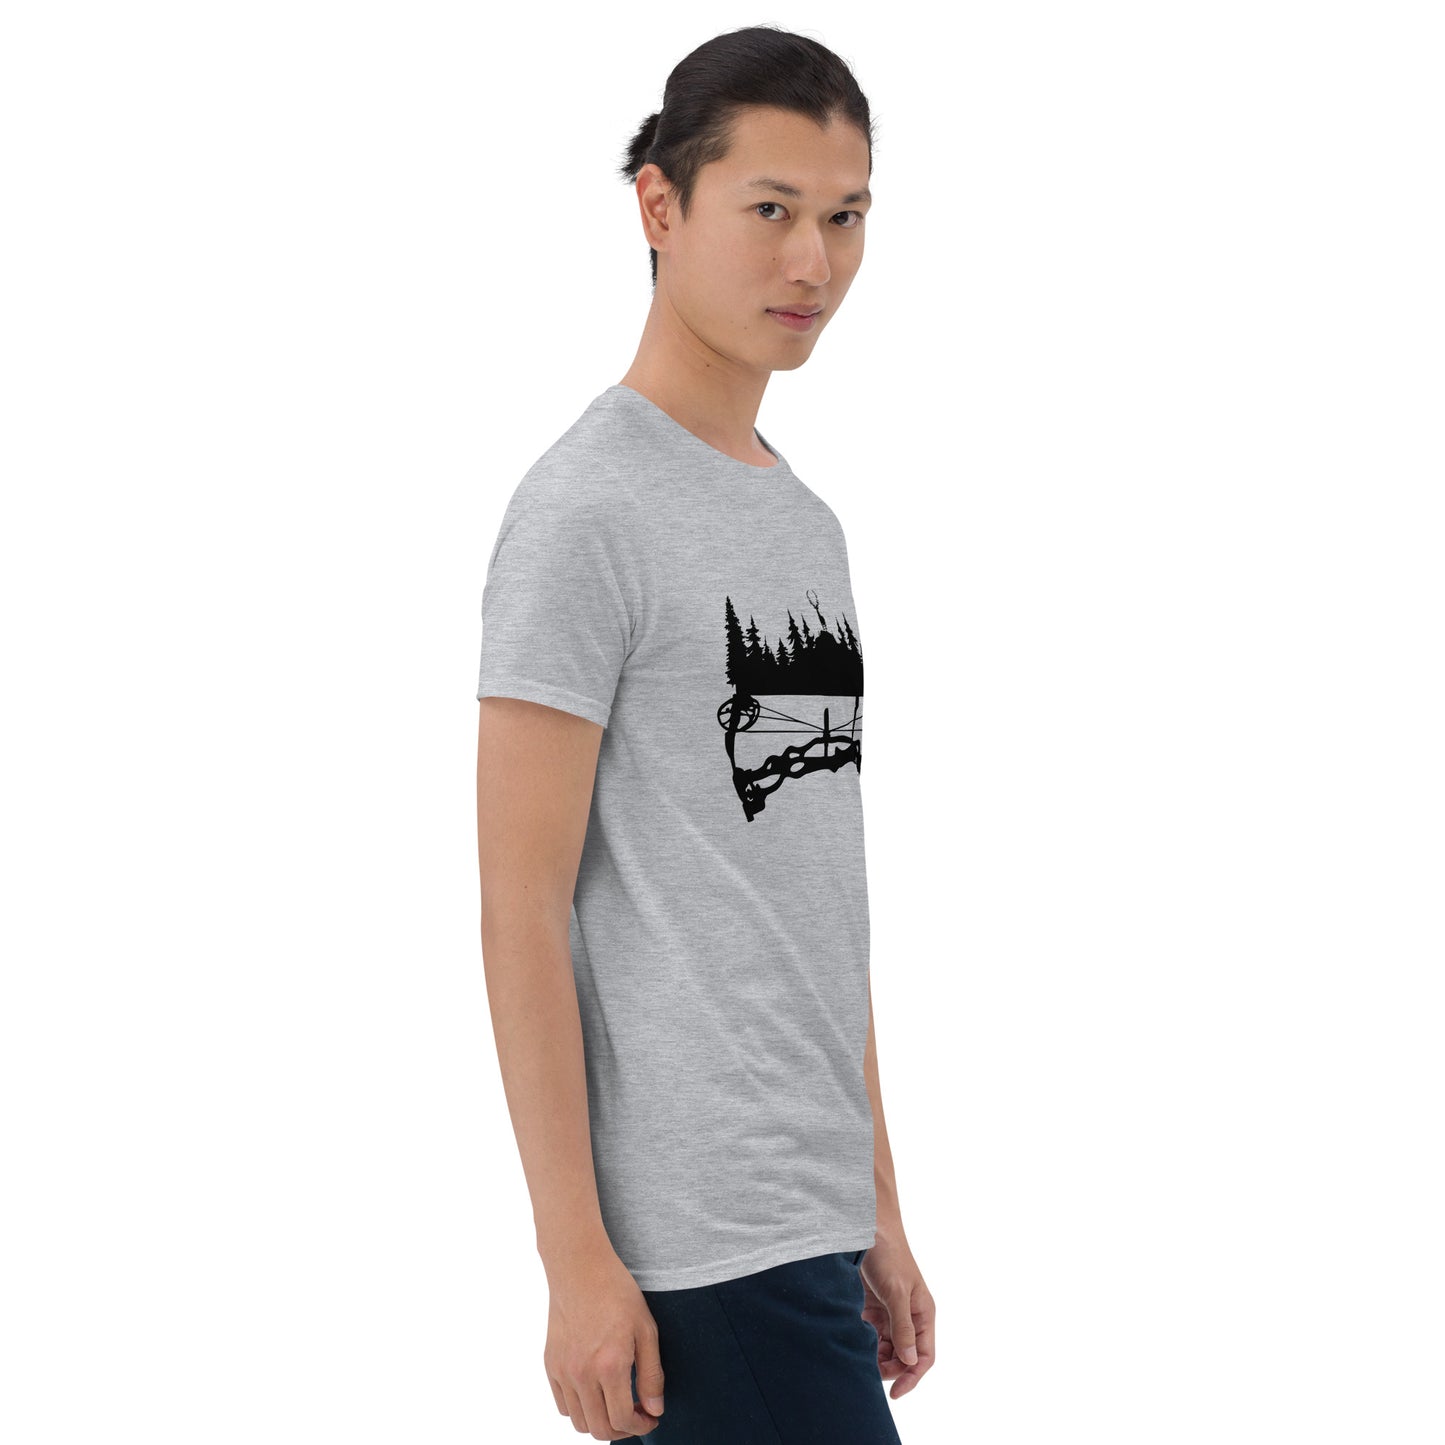 Bow Hunter Super Soft Short-Sleeve Unisex T-Shirt